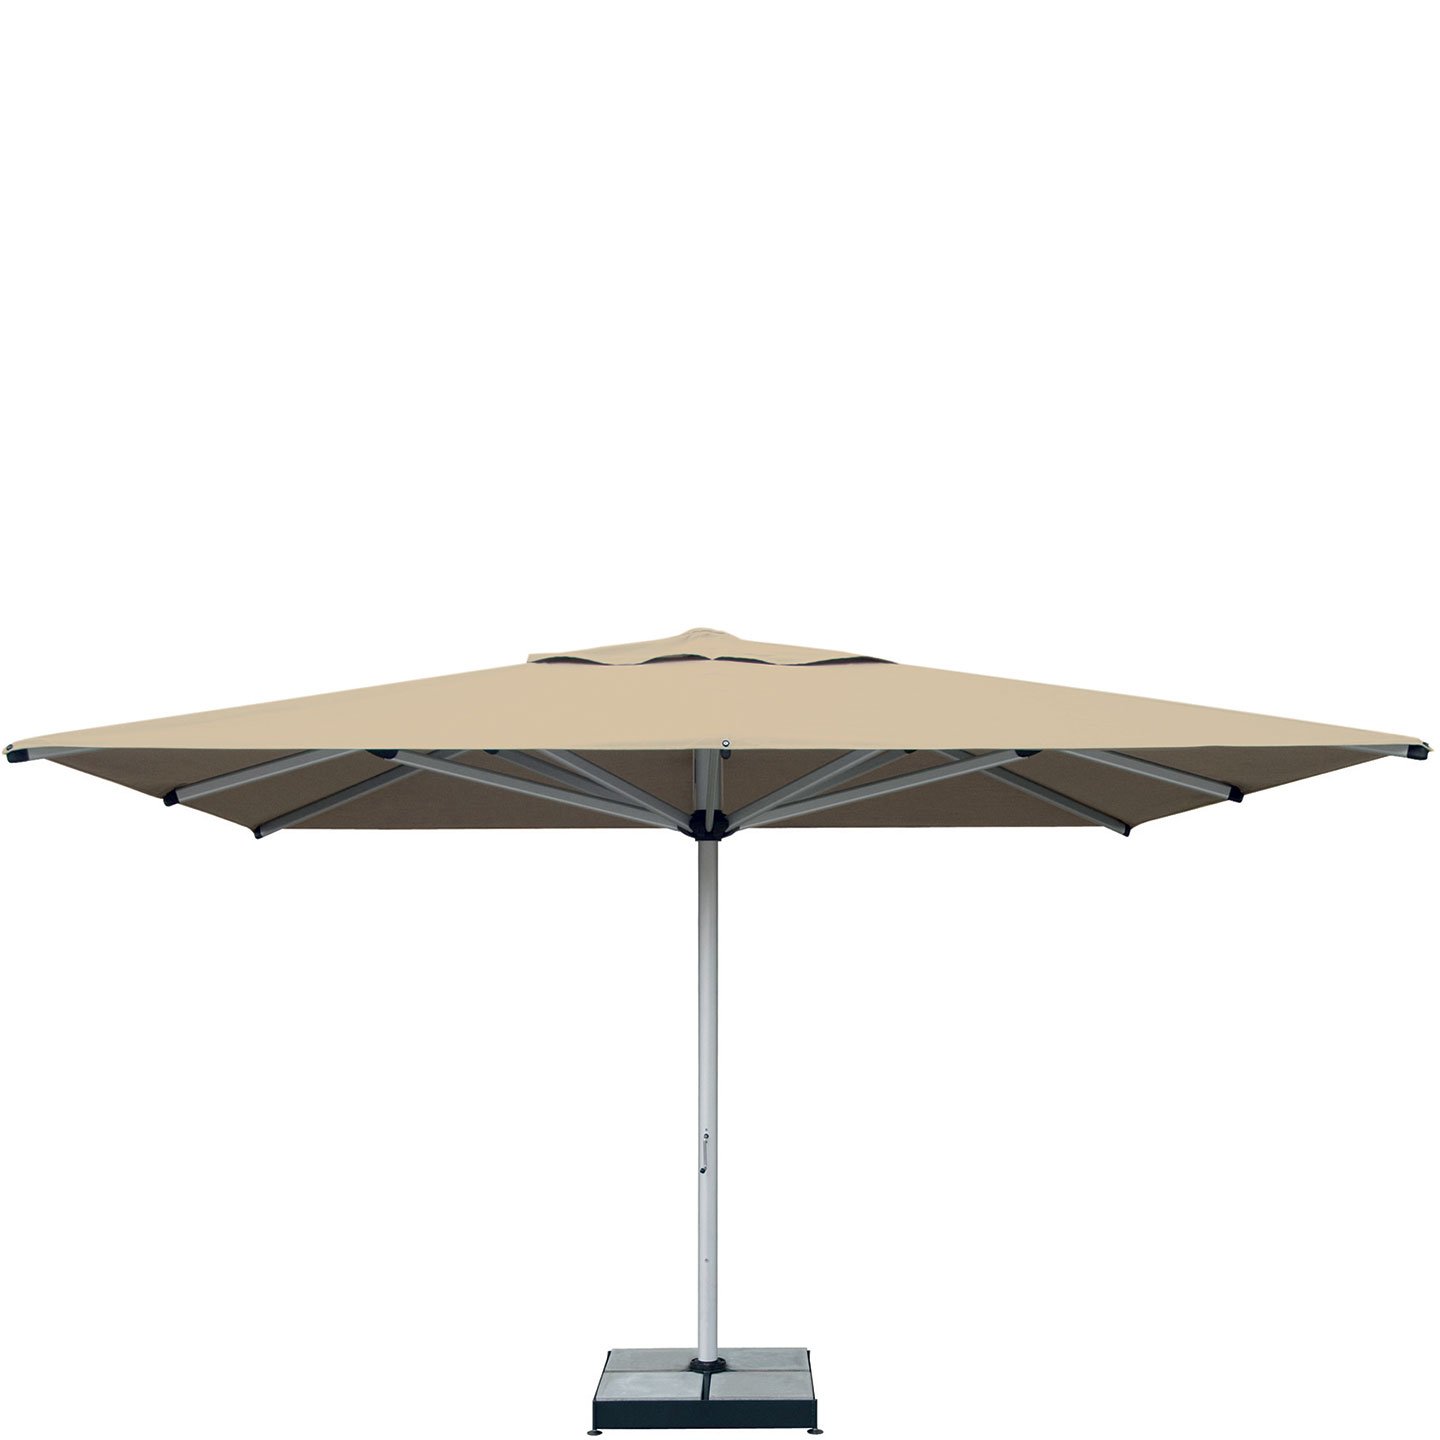 Haworth Janus Titan Umbrella Accessories with tan top and black base